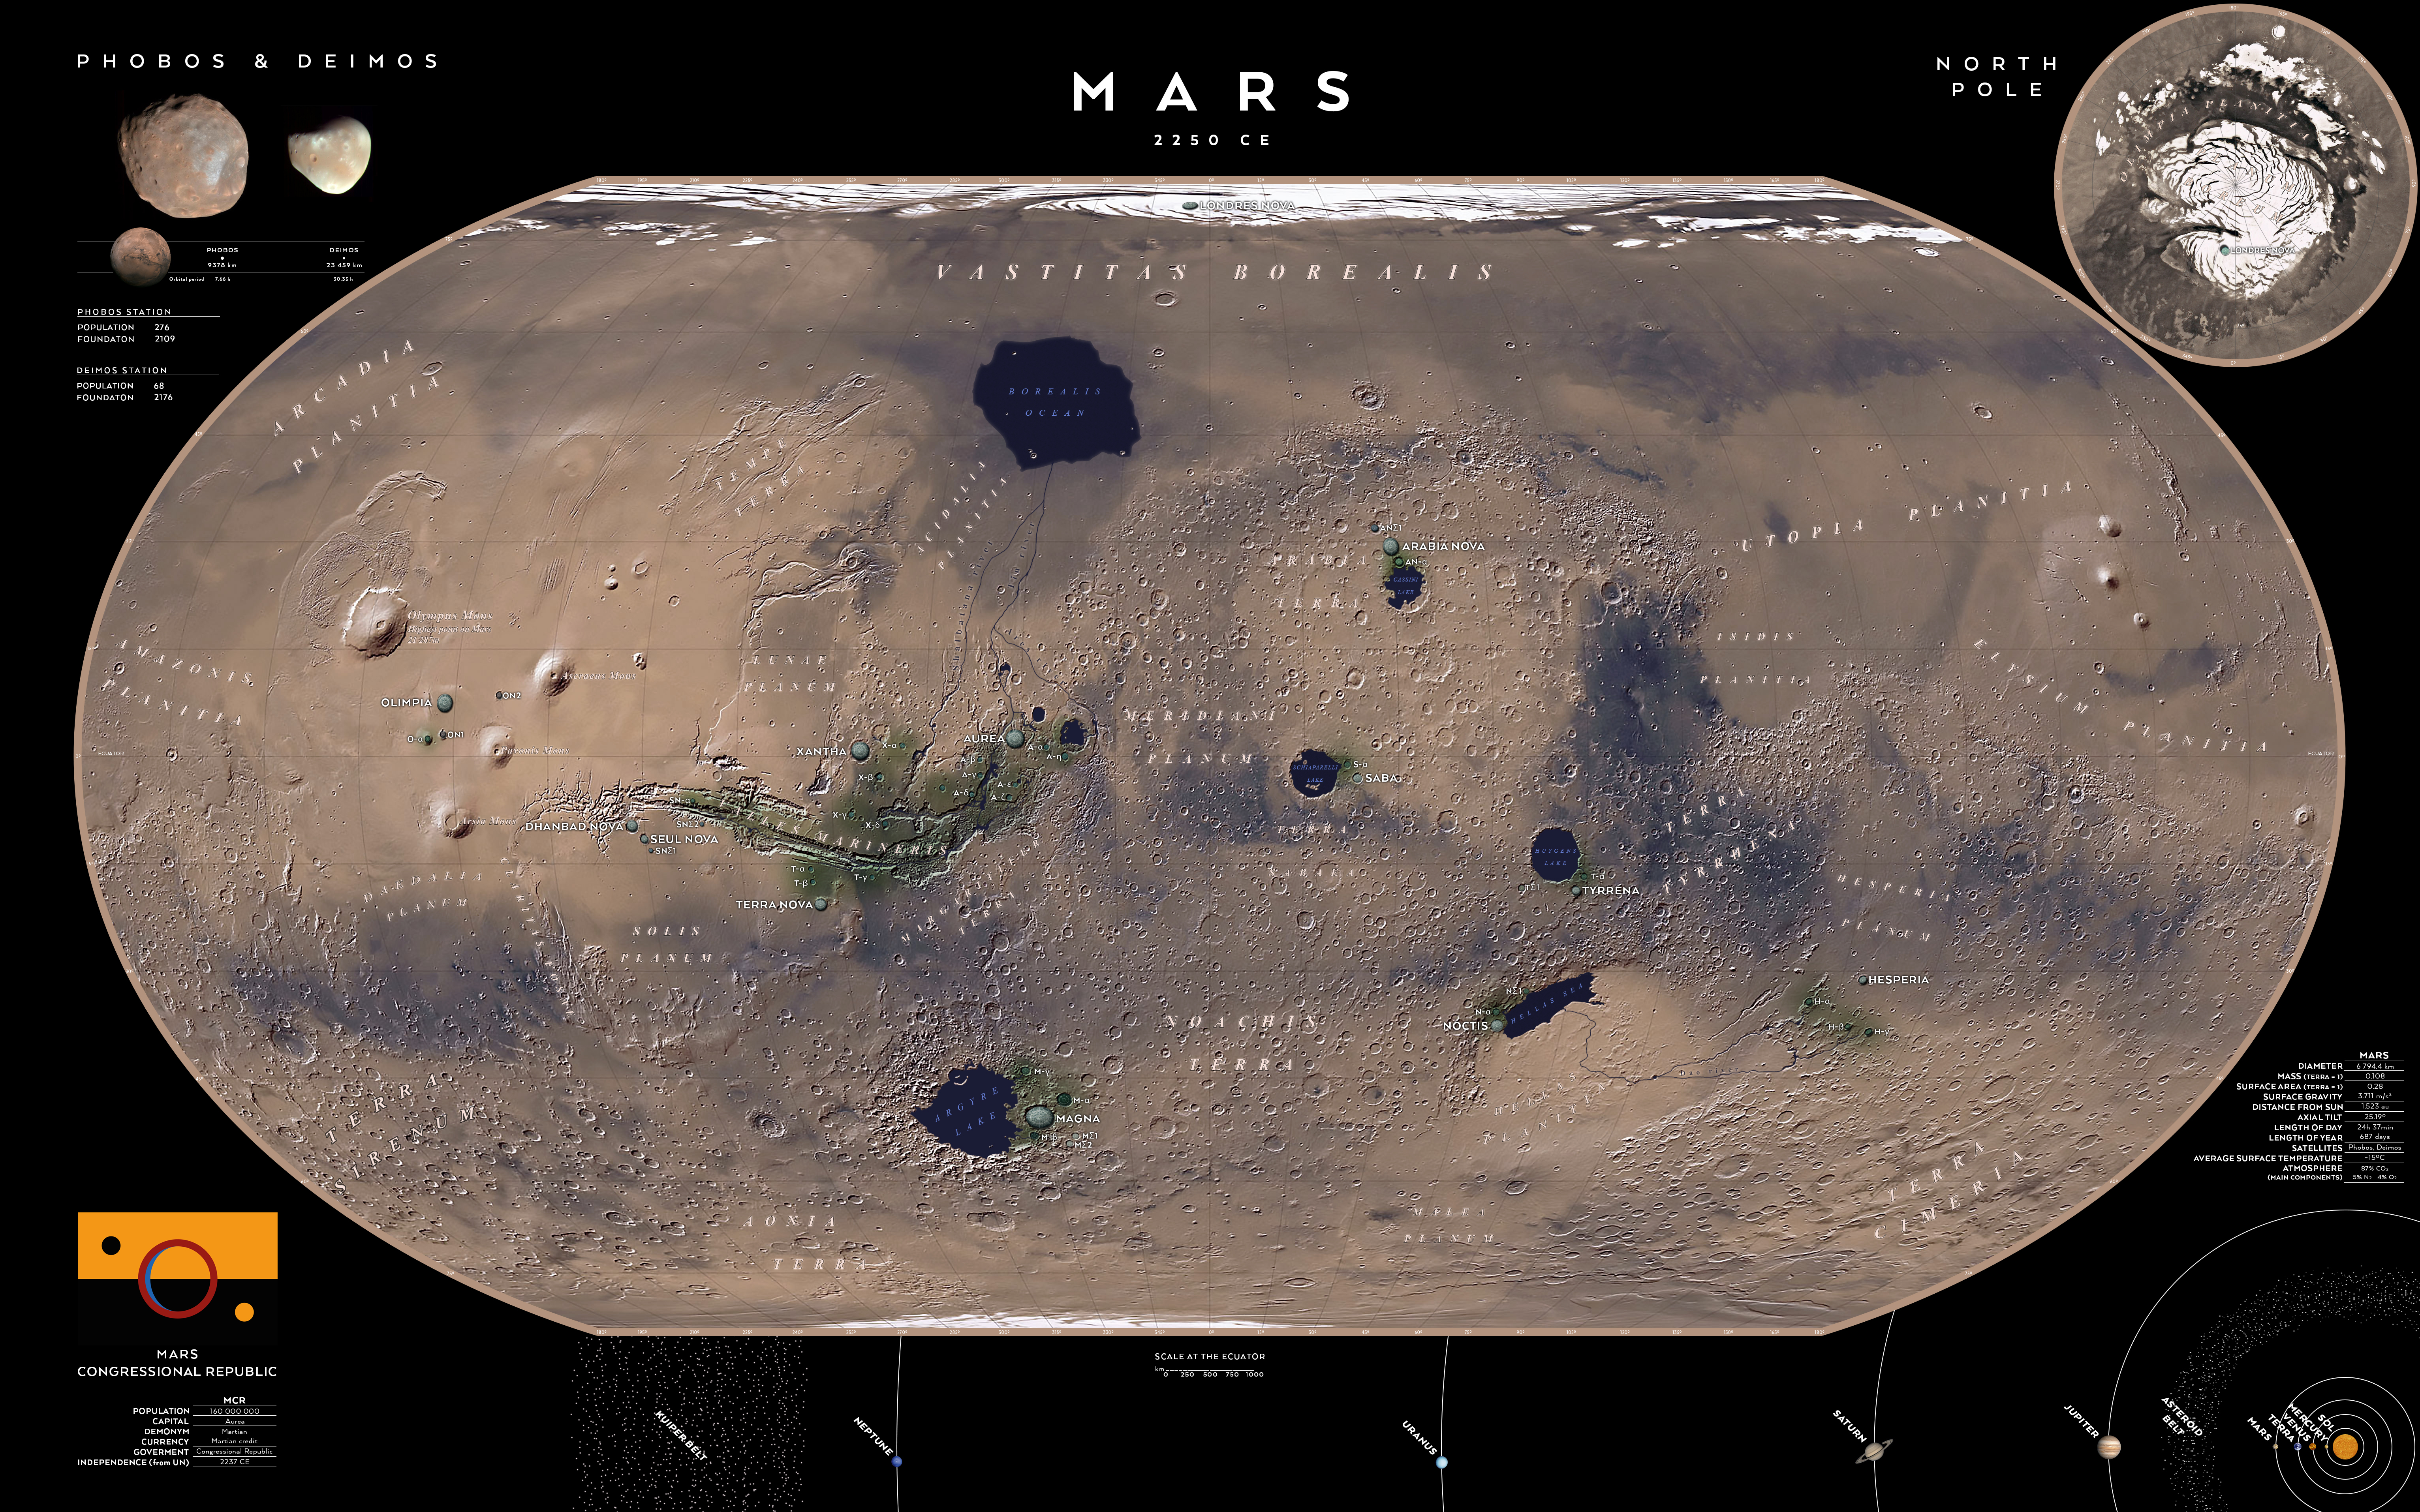 Mars year 2250 CE